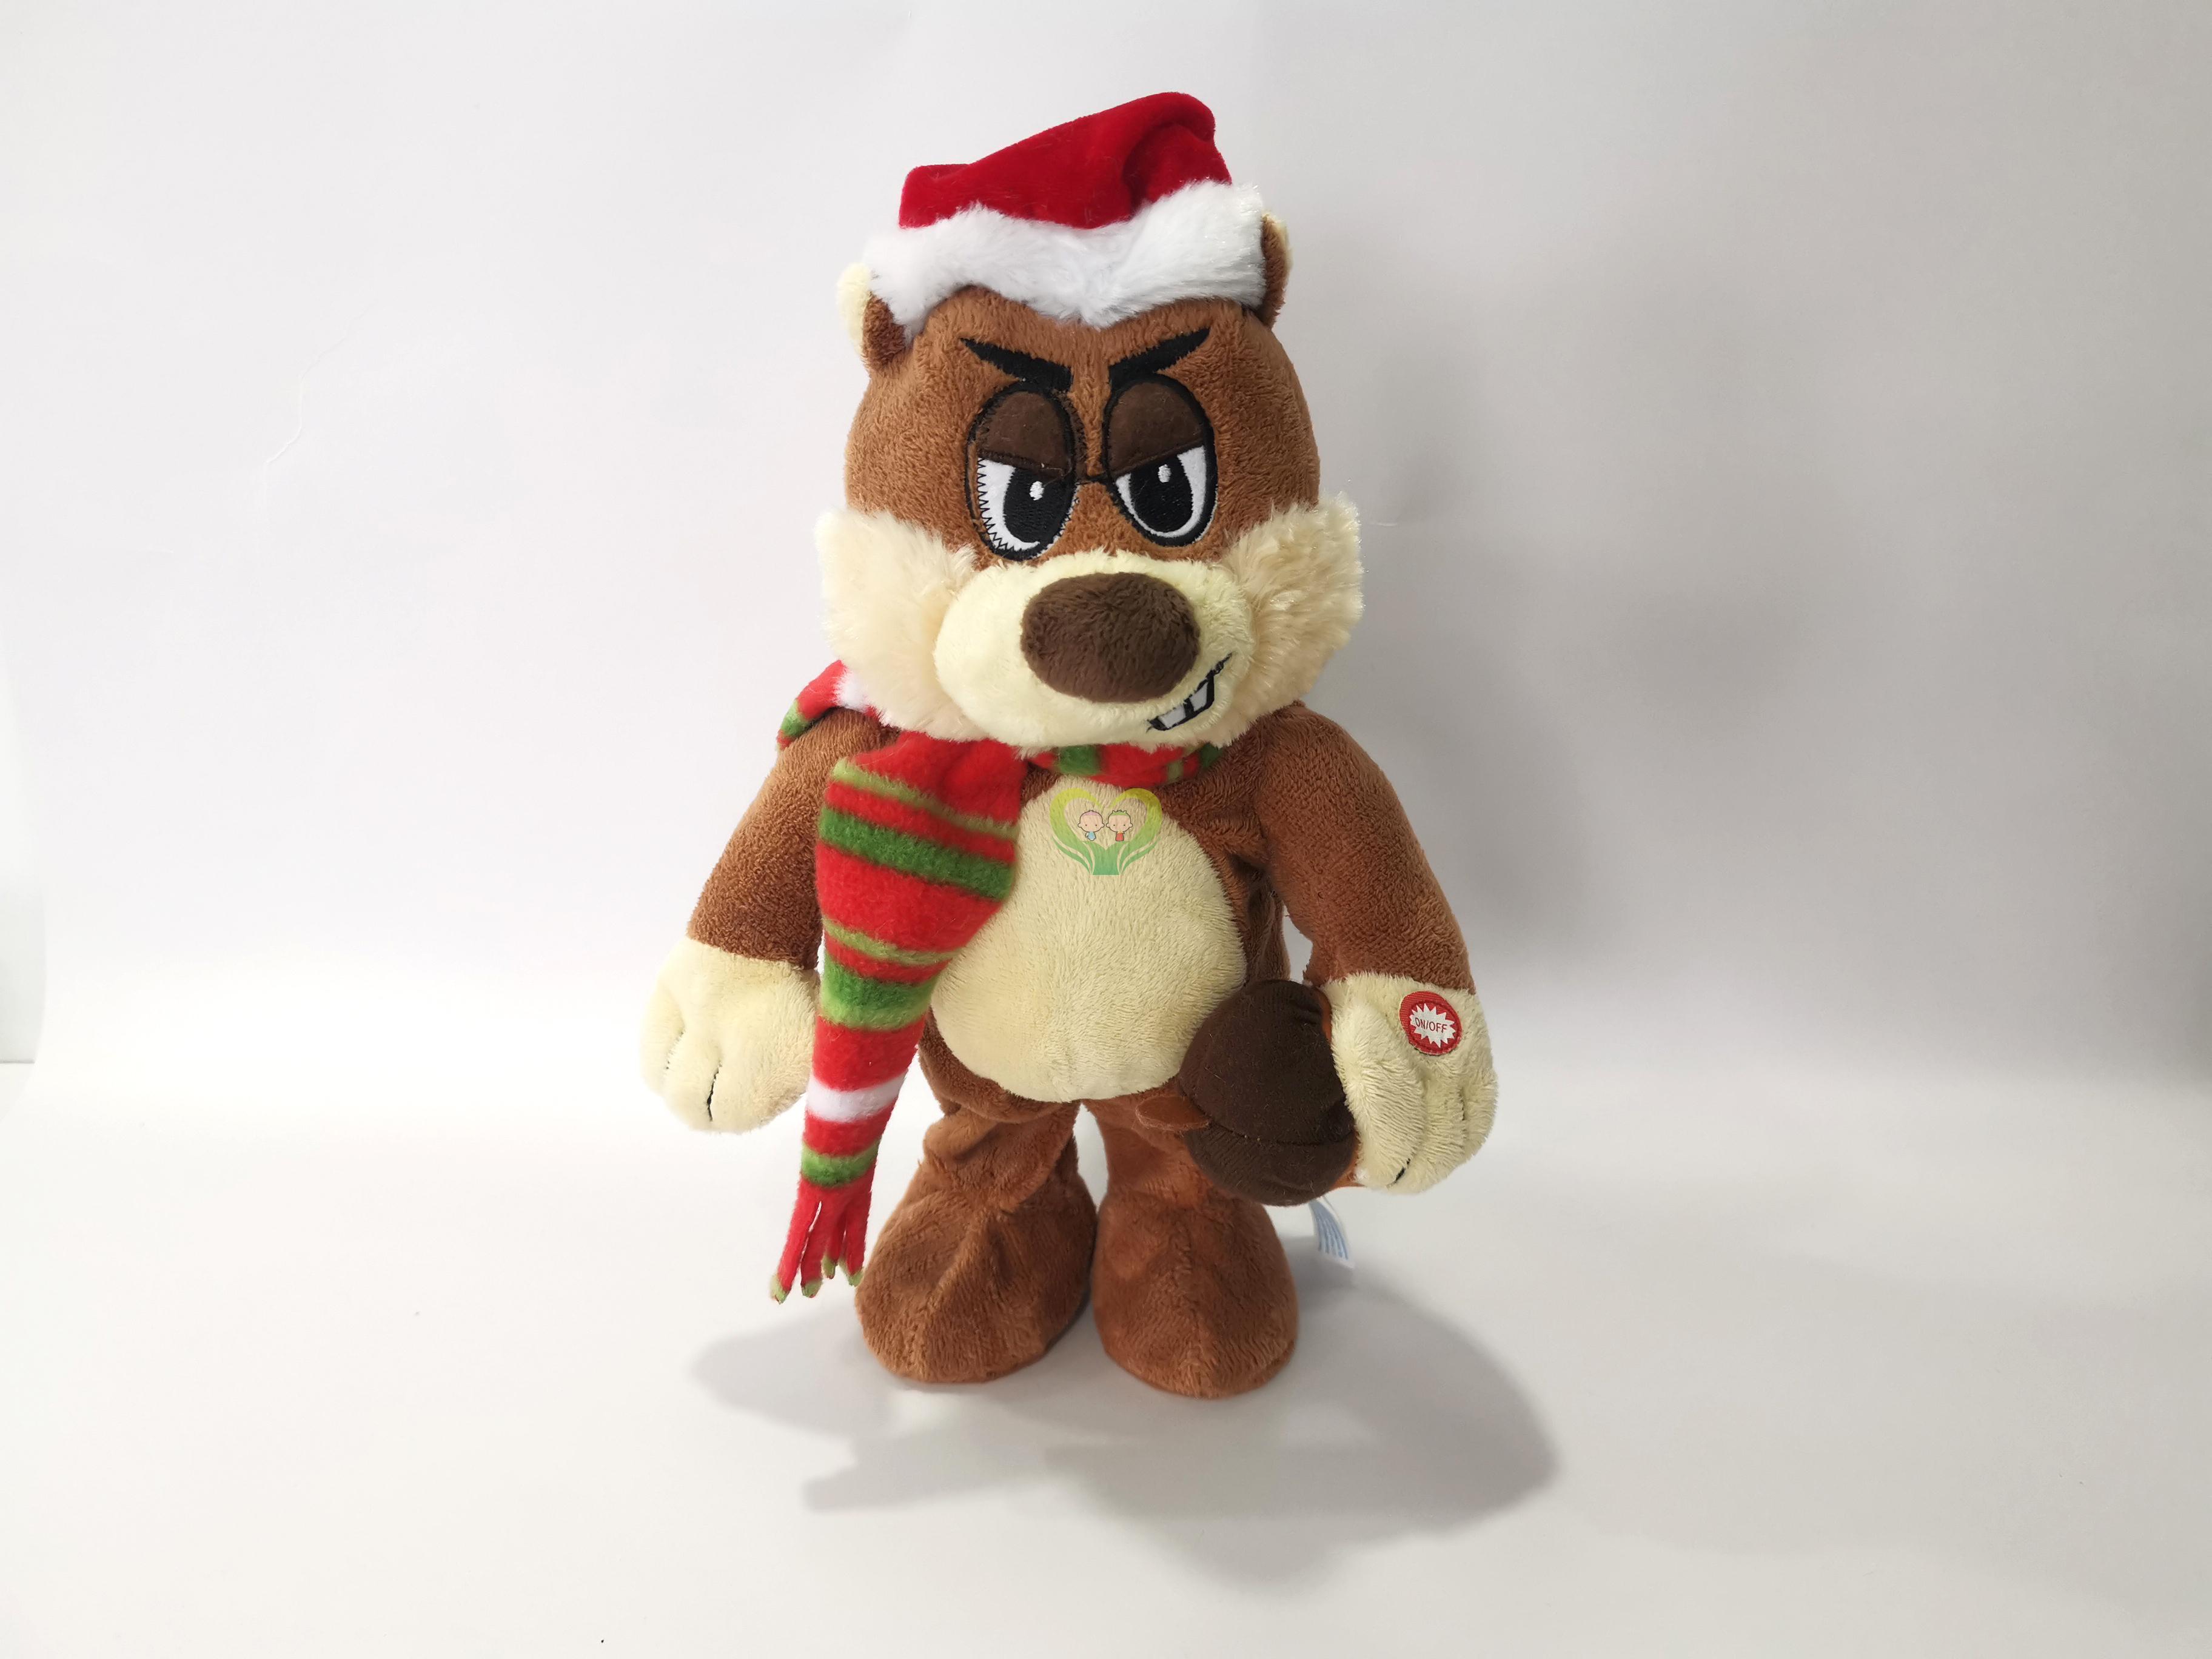 2018 Christmas Electronic plush toy: Santa Bear with Music